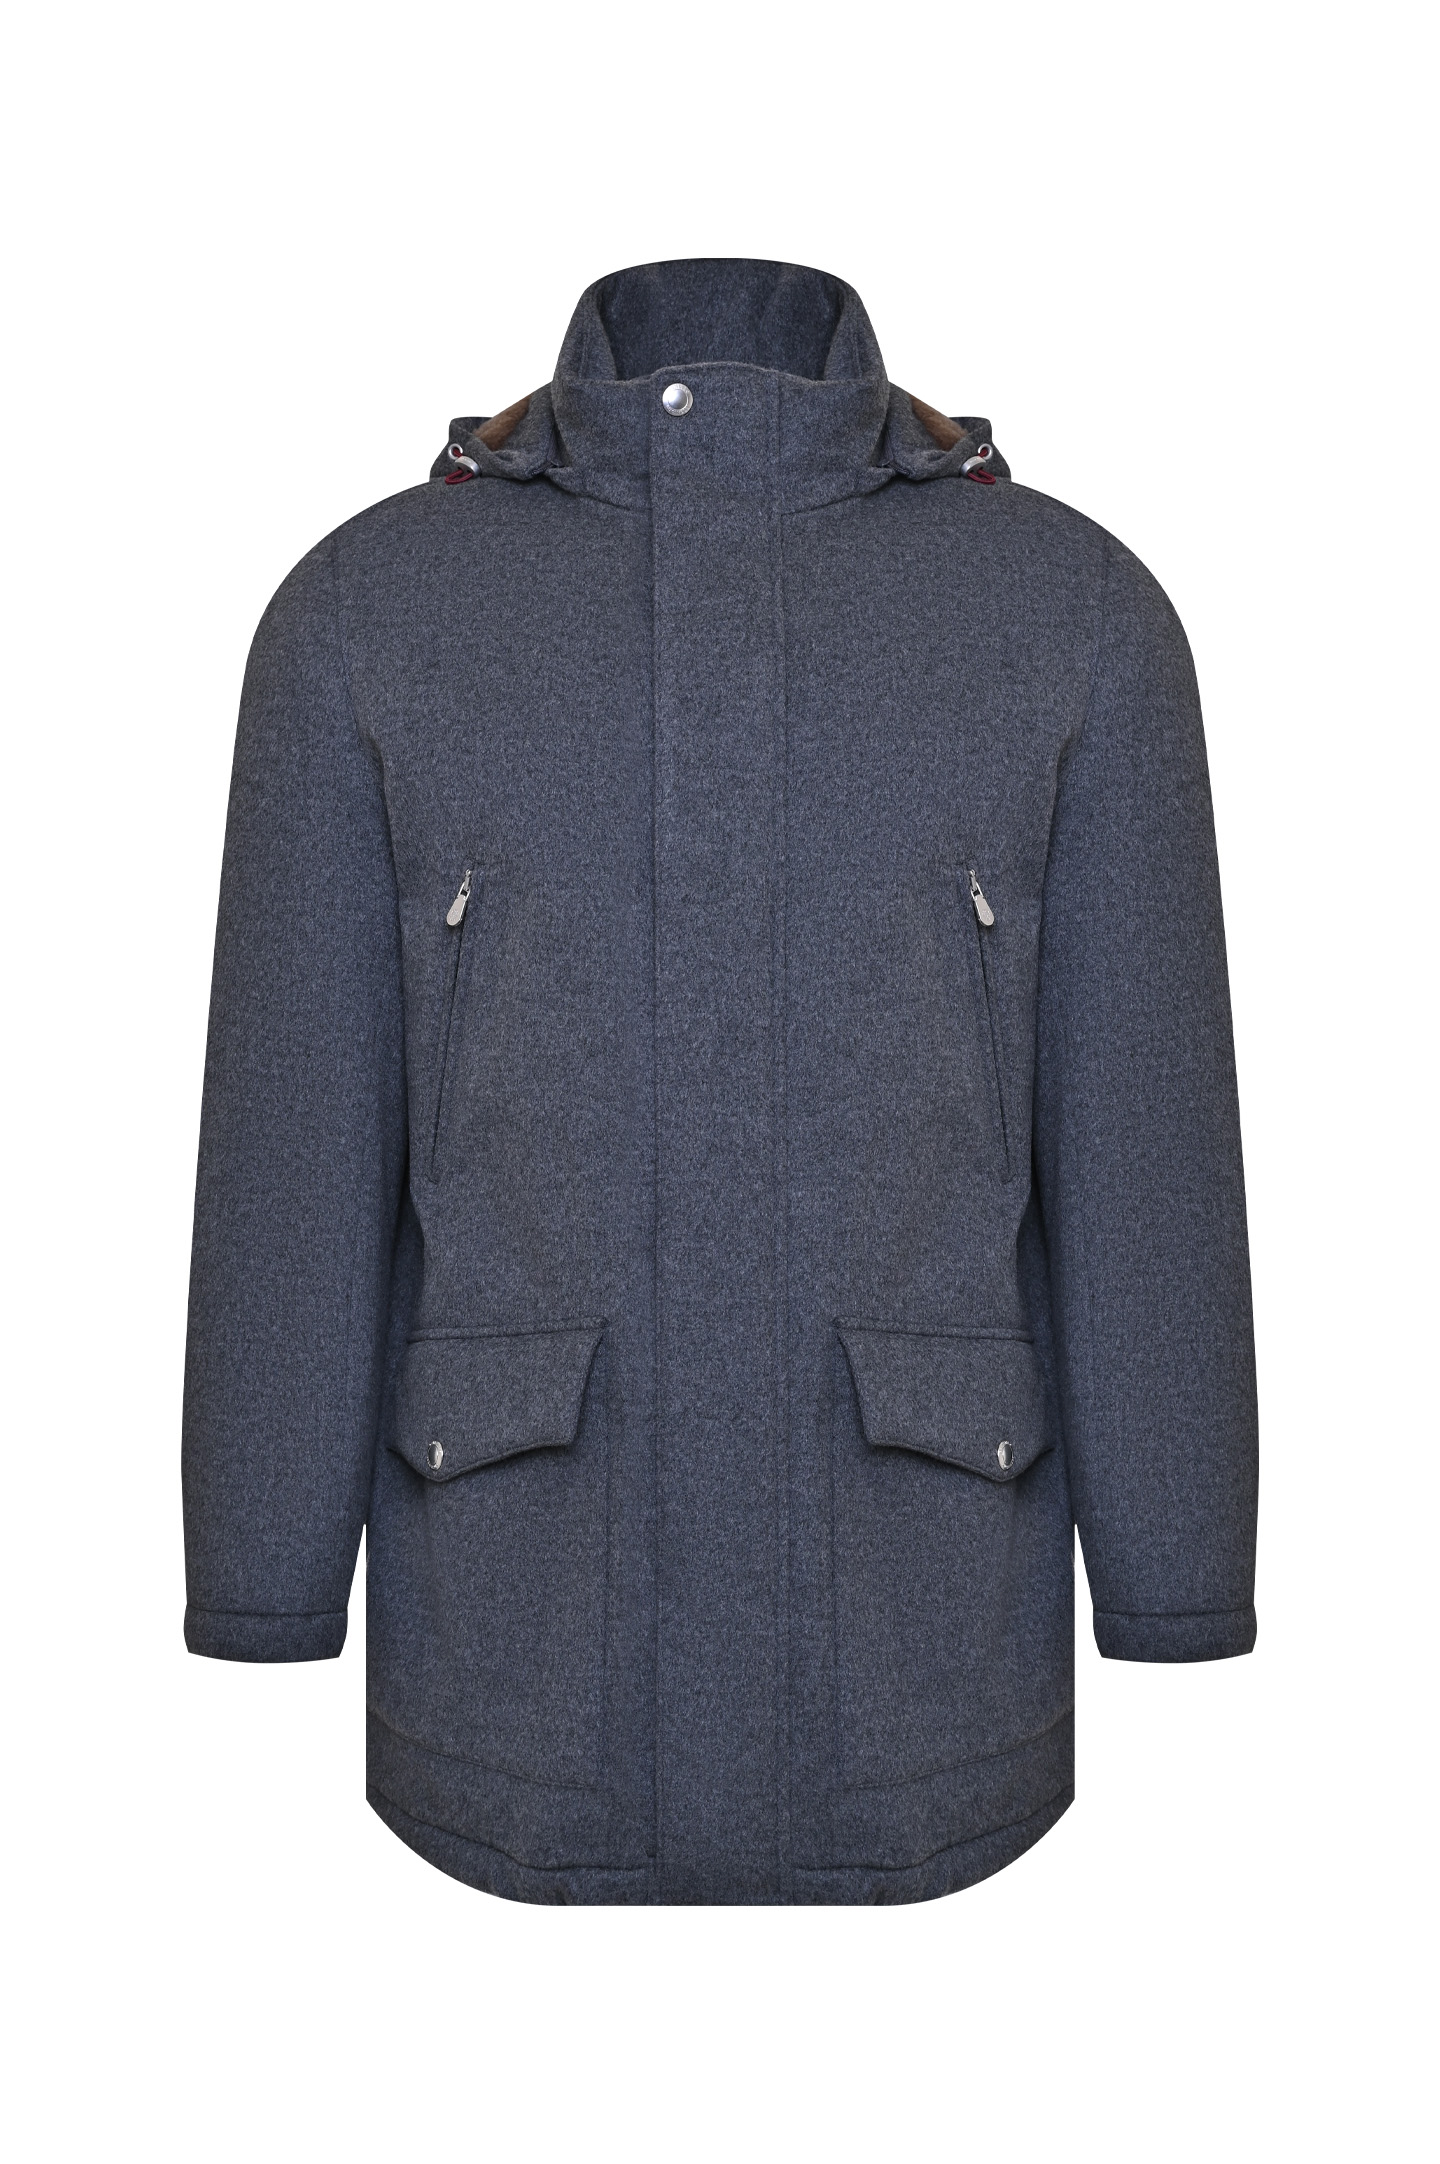 Меховое пальто BRUNELLO  CUCINELLI MM4006478, цвет: Серый, Мужской